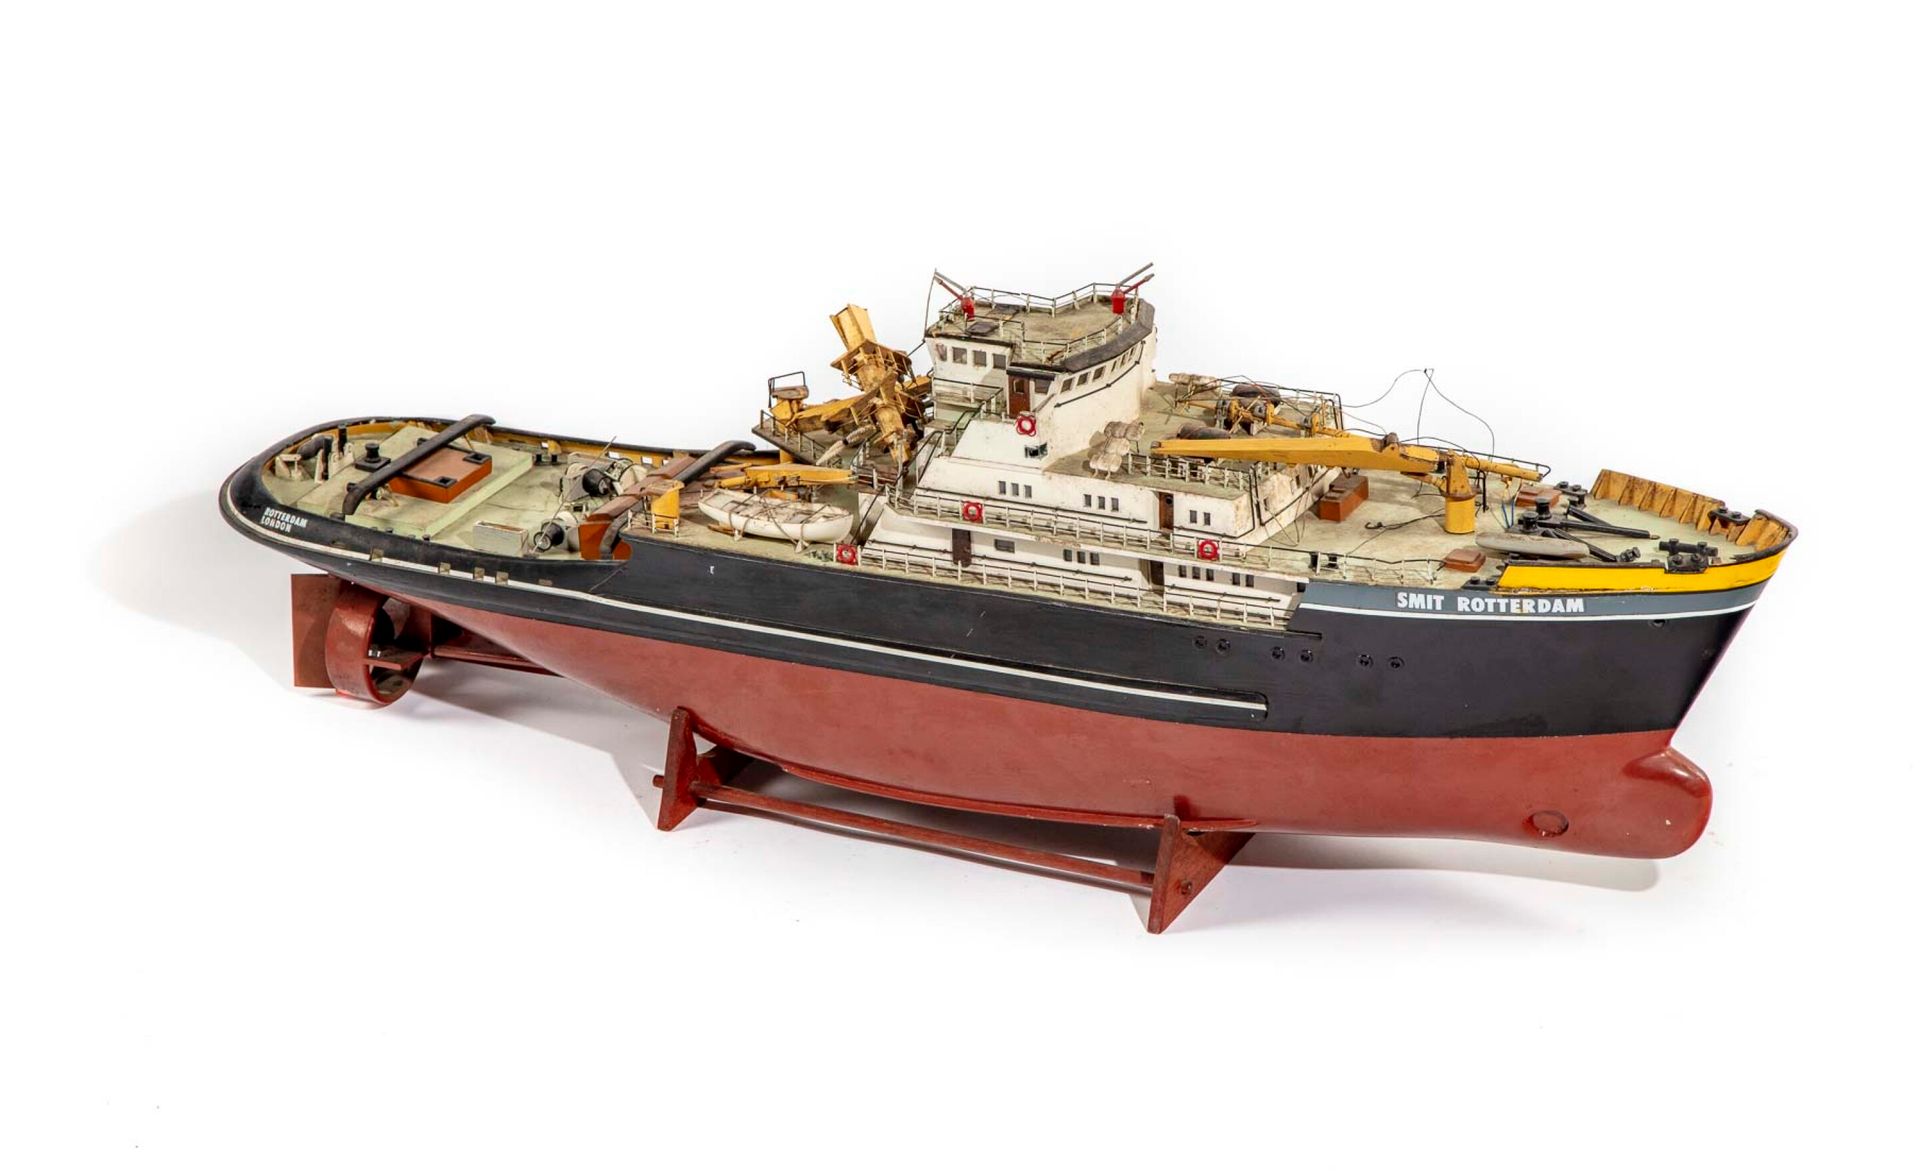 SMIT ROTTERDAM 斯密特-罗特丹 "号拖船模型，涂色木料

混乱的桅杆

H .30厘米；长：92厘米

小事故和丢失的零件